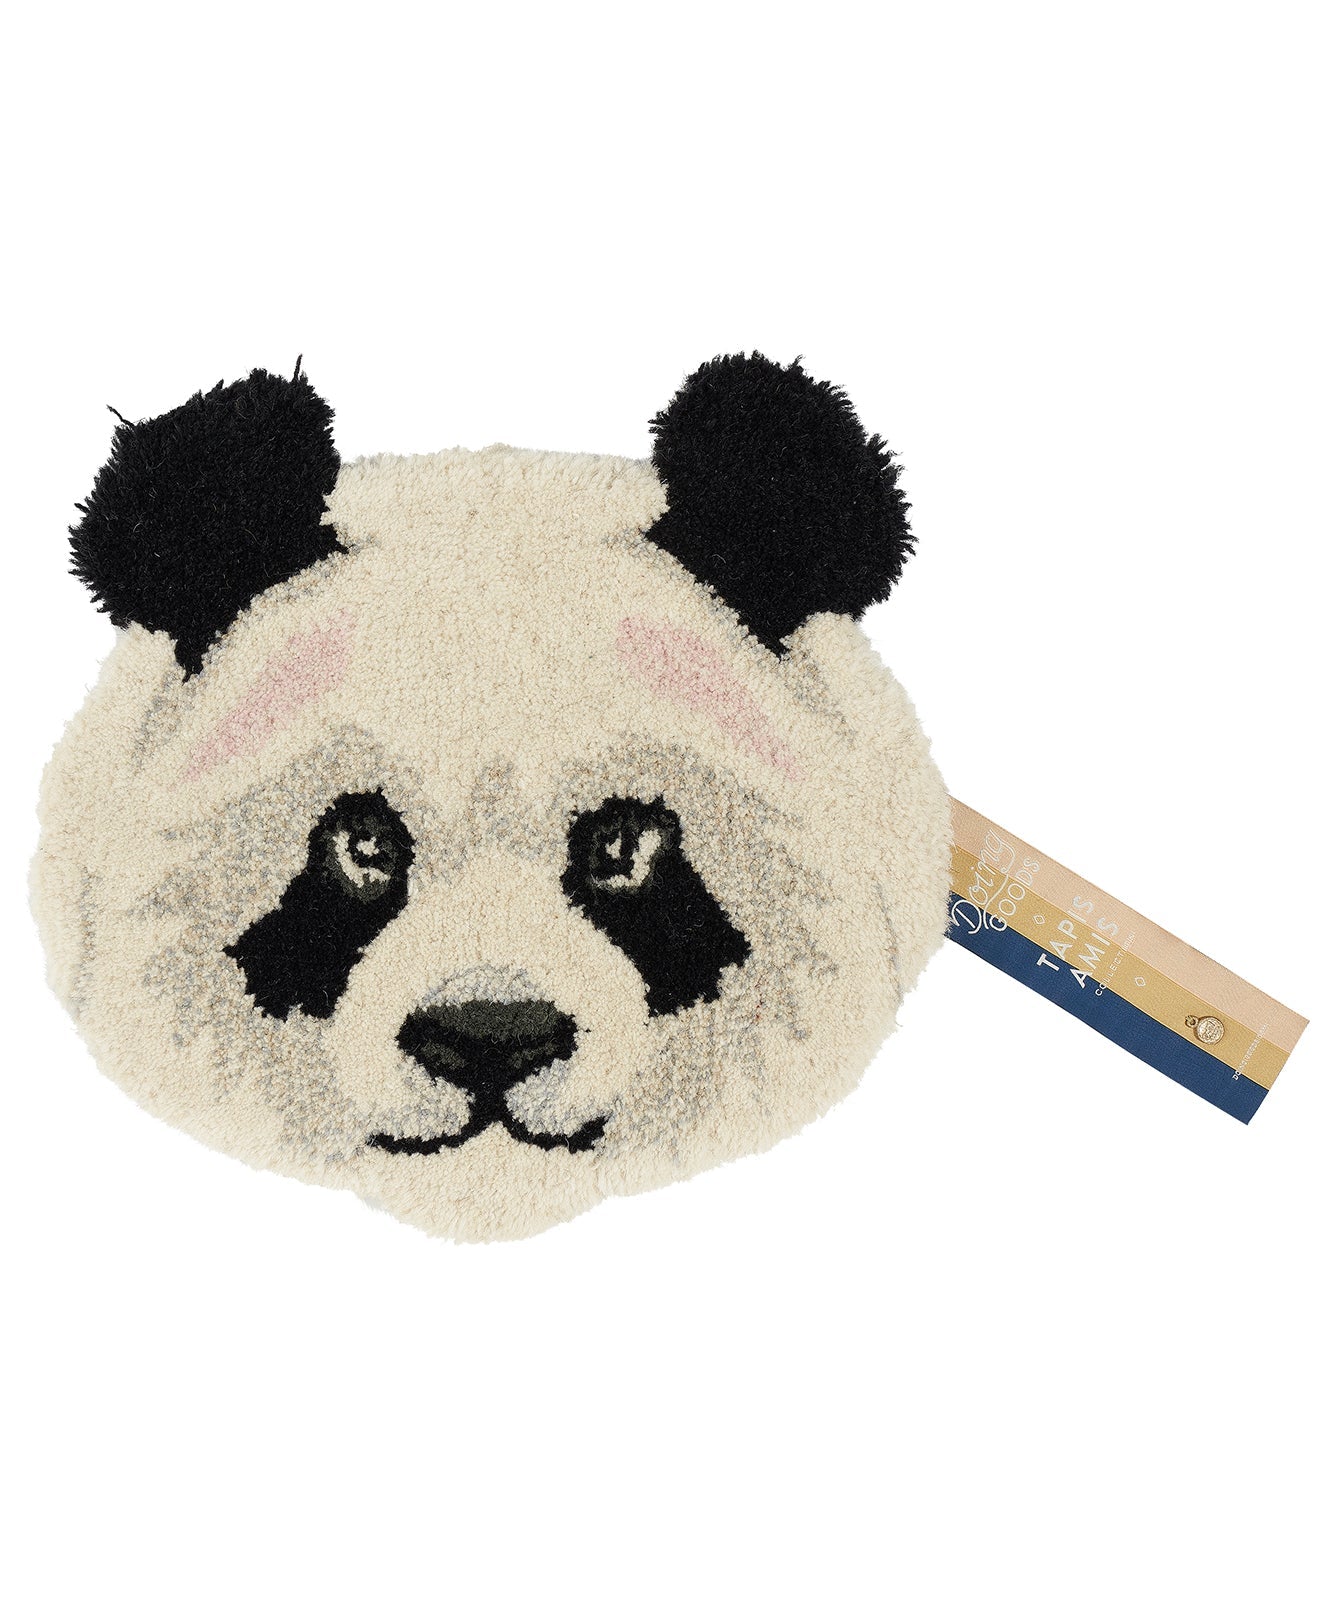 Plumpy panda head rug - Urban Nest